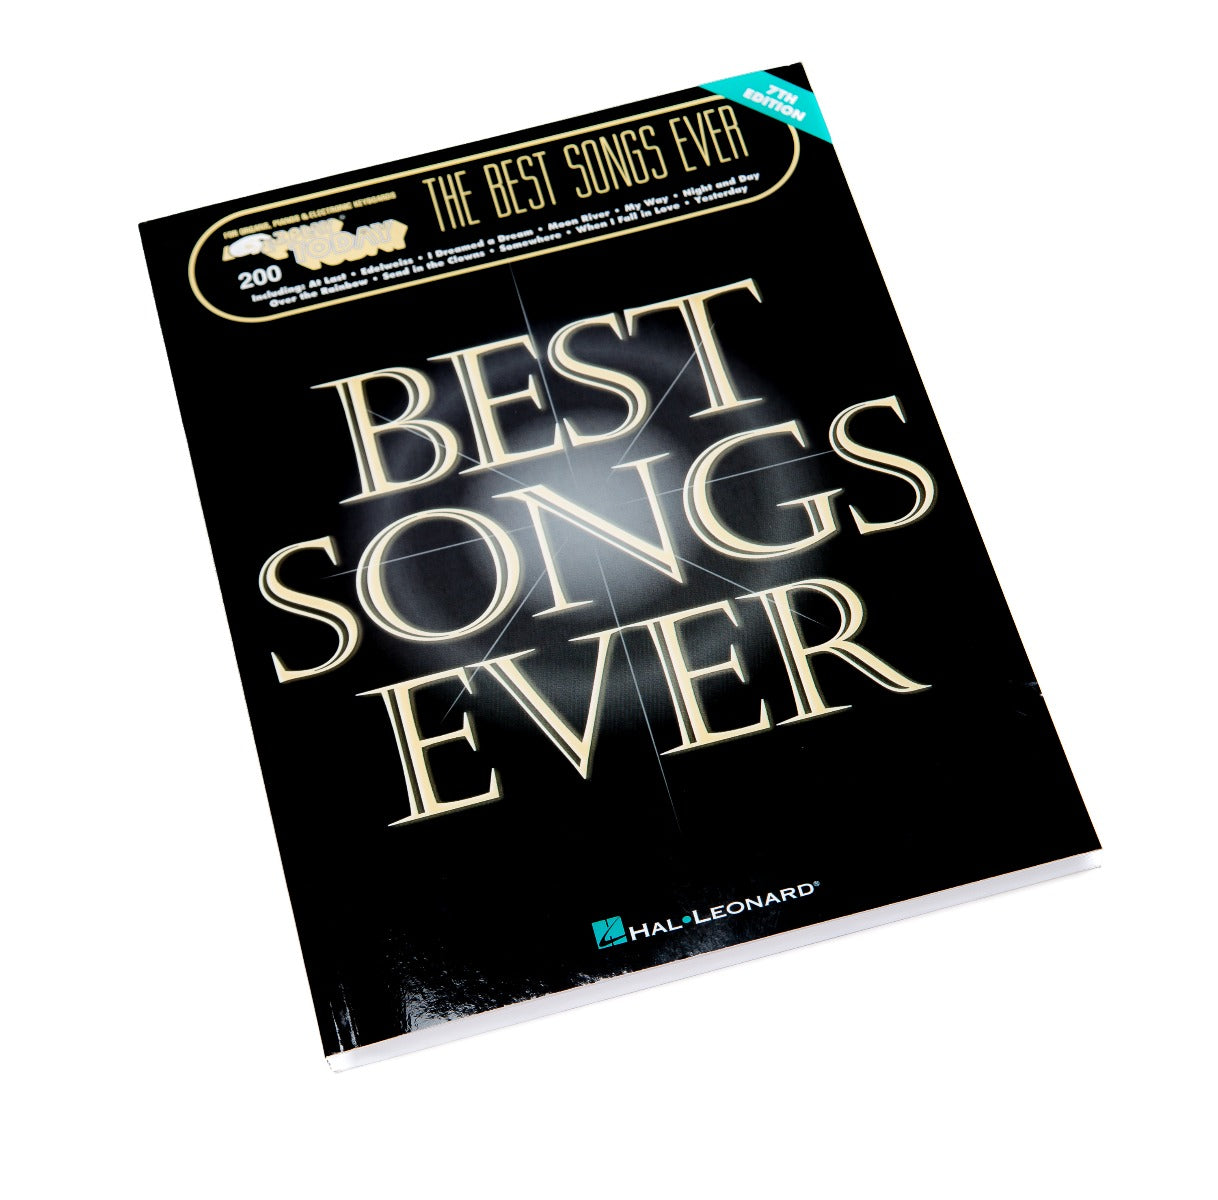 Image of Yamaha CVP Series Entertainment Pack & Starter Kit "Best Songs Ever" book